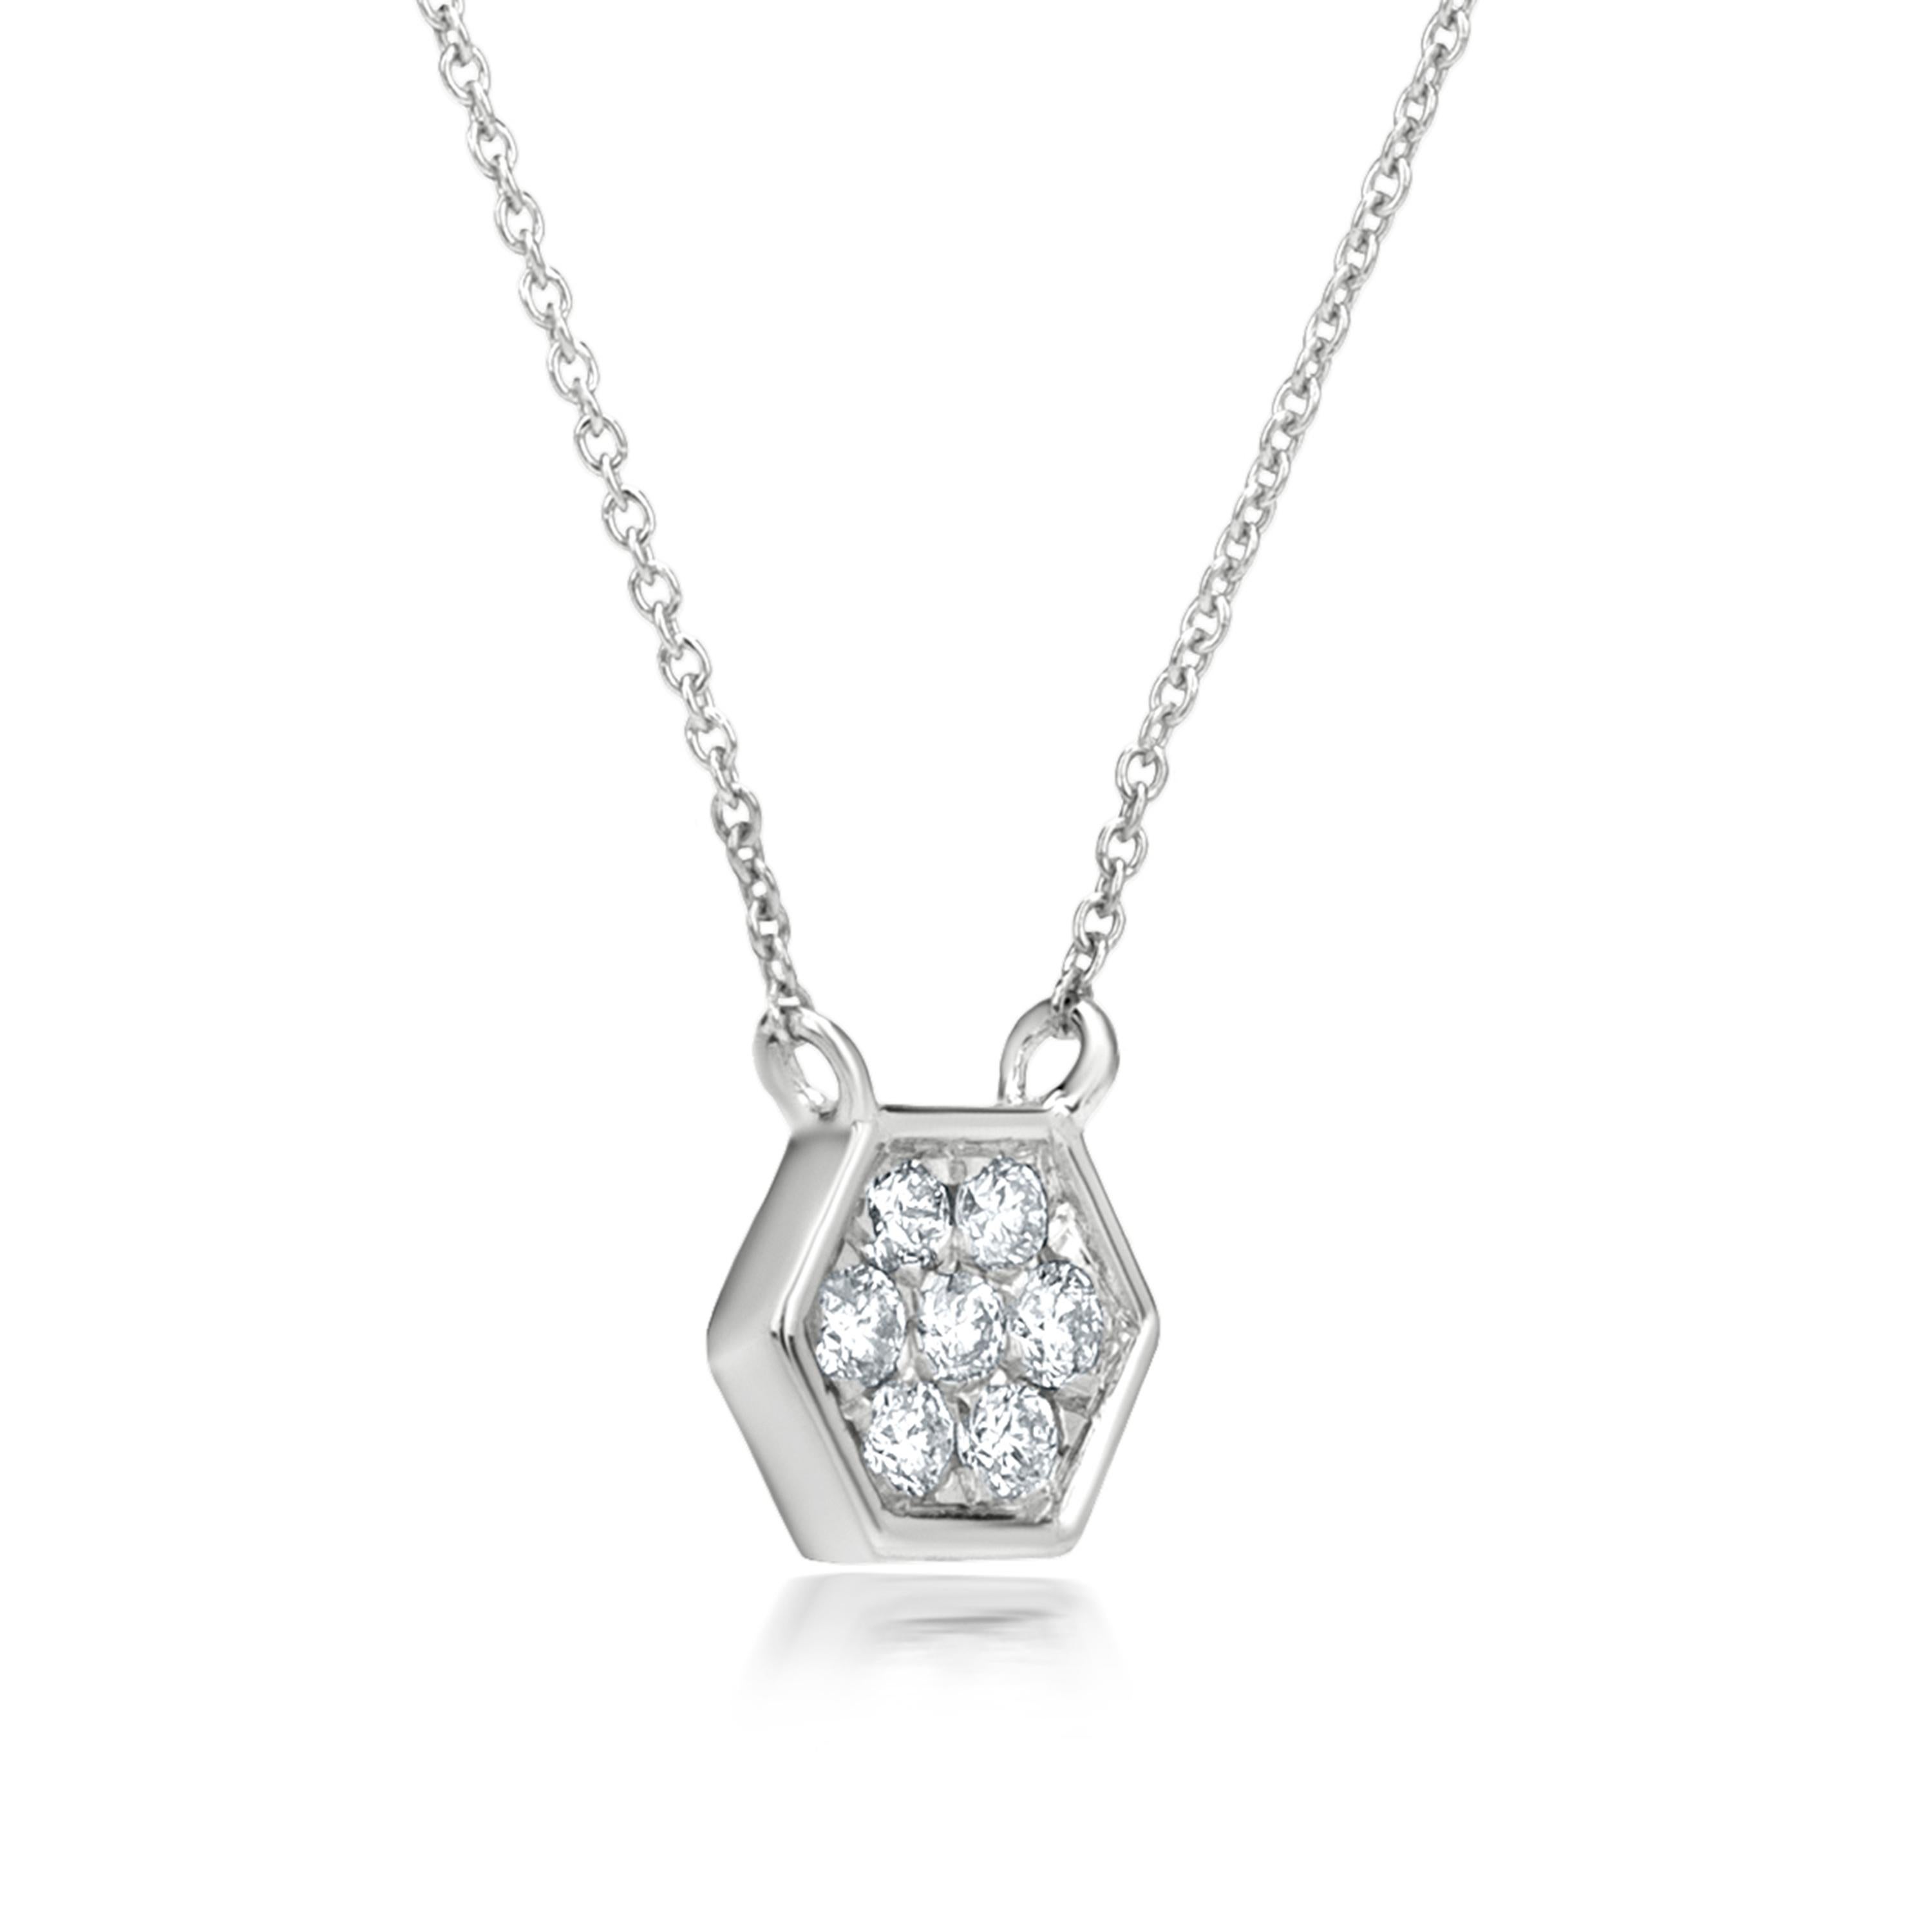 Contemporary Luxle Hexagonal Diamond Pendant Necklace in 18K White Gold